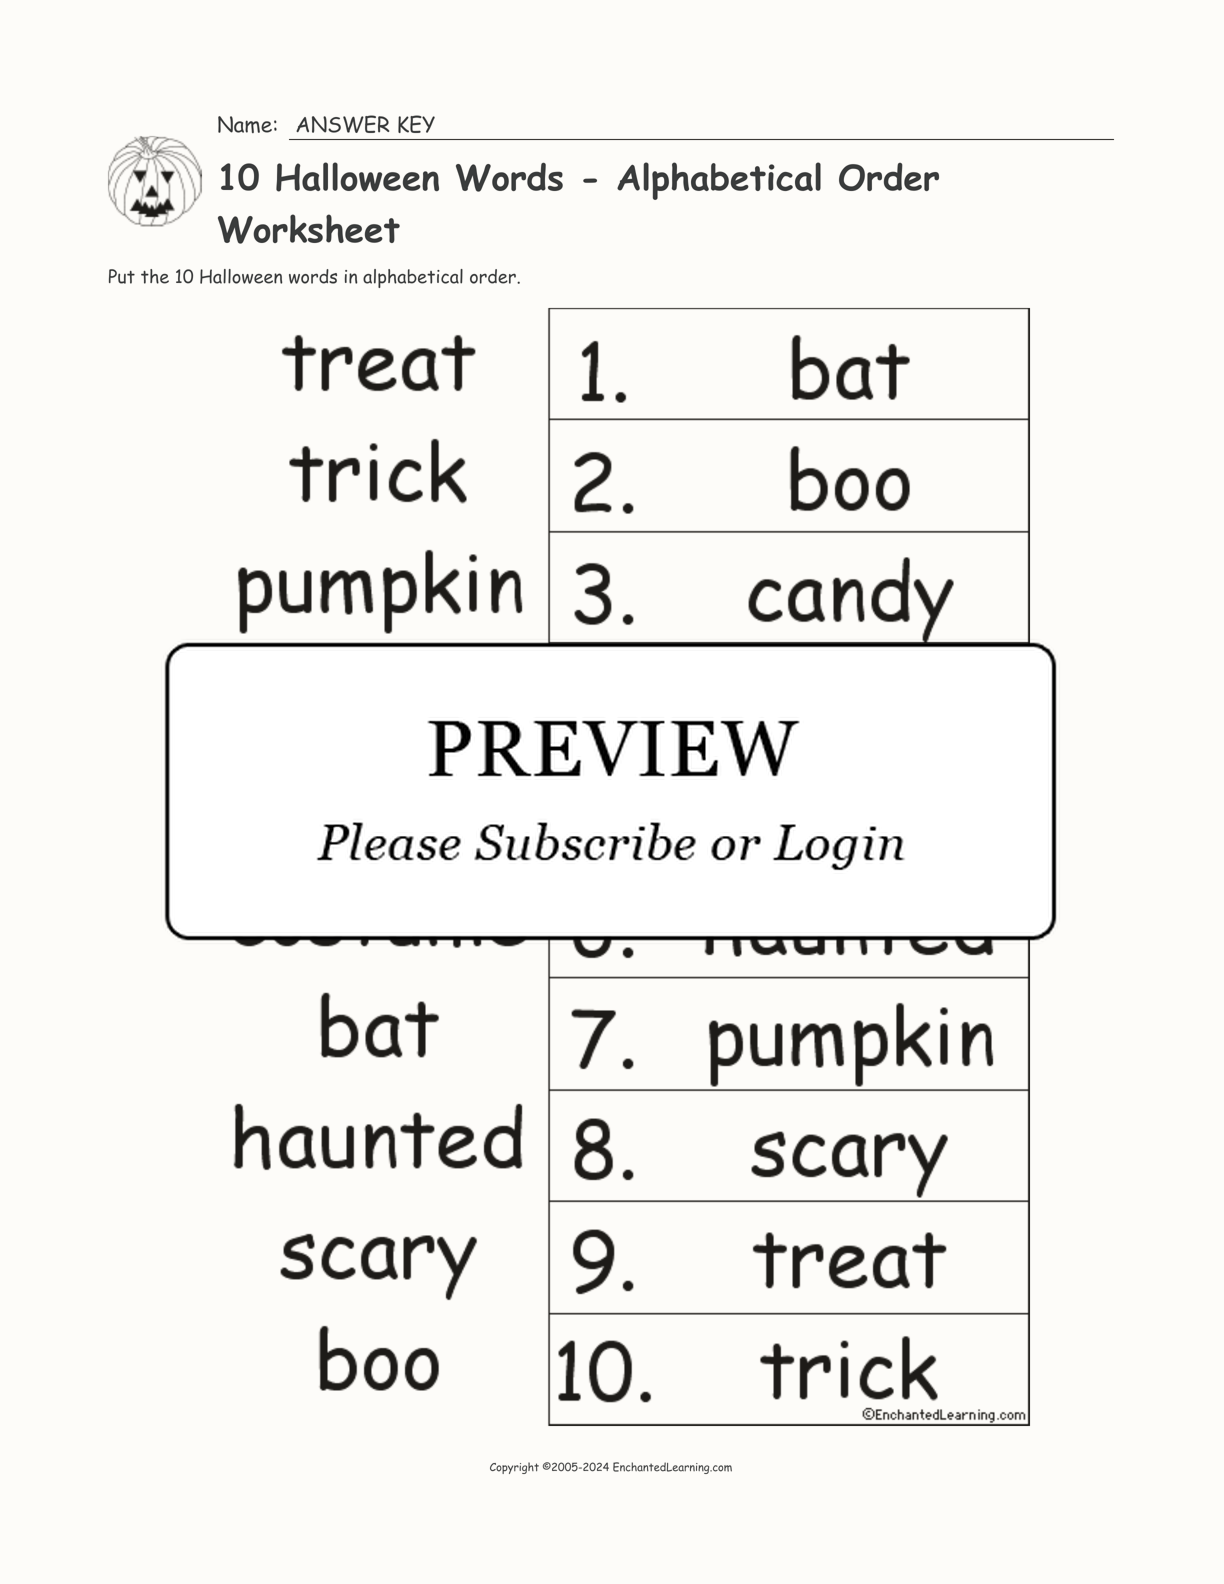 10 Halloween Words - Alphabetical Order Worksheet interactive worksheet page 2